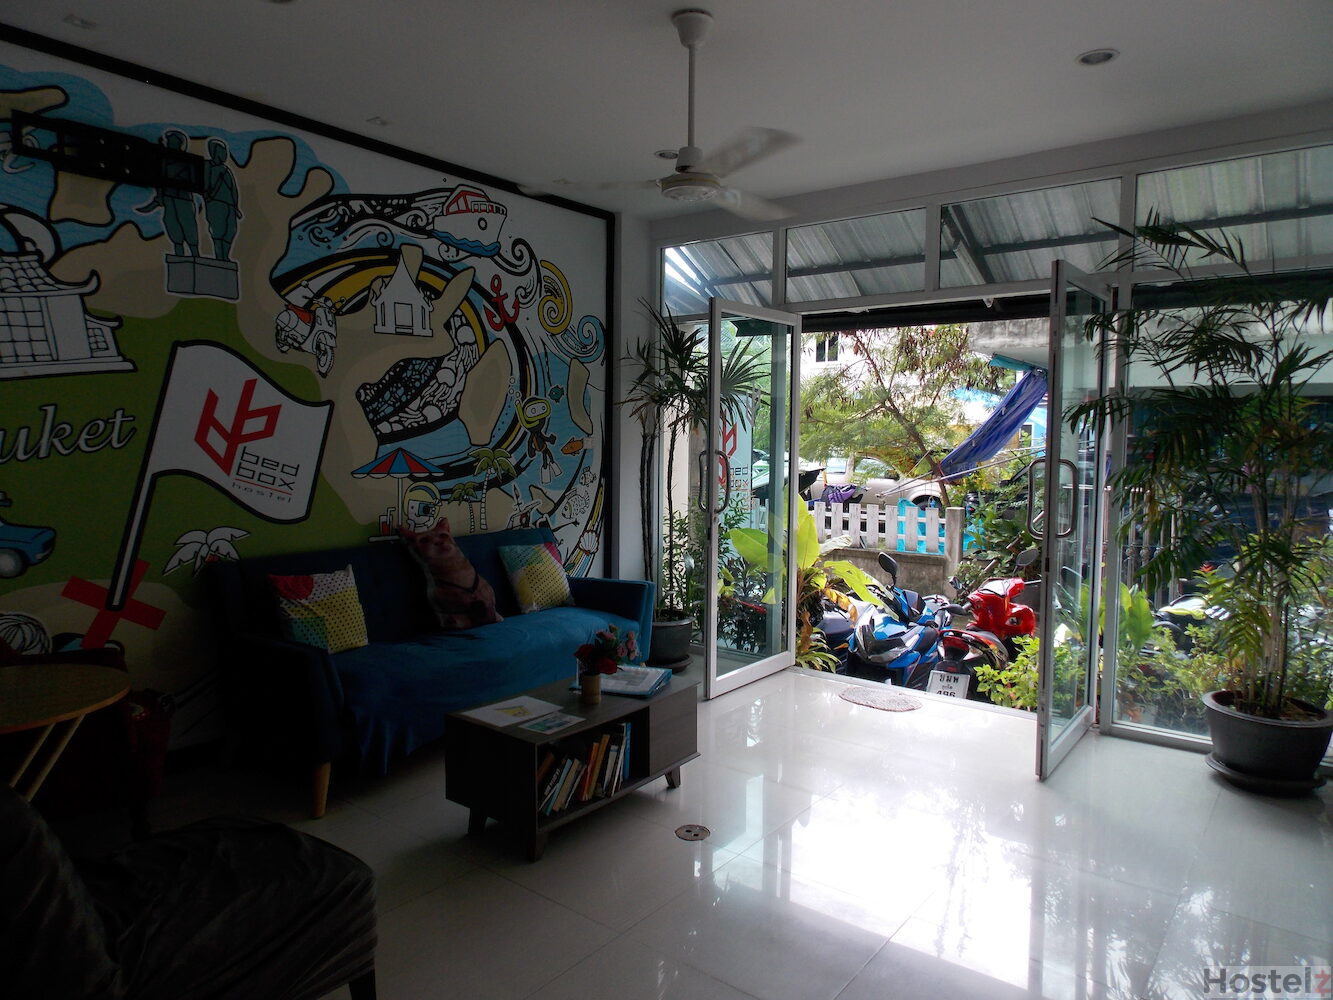 Bedbox Guesthouse & Hostel, Phuket City